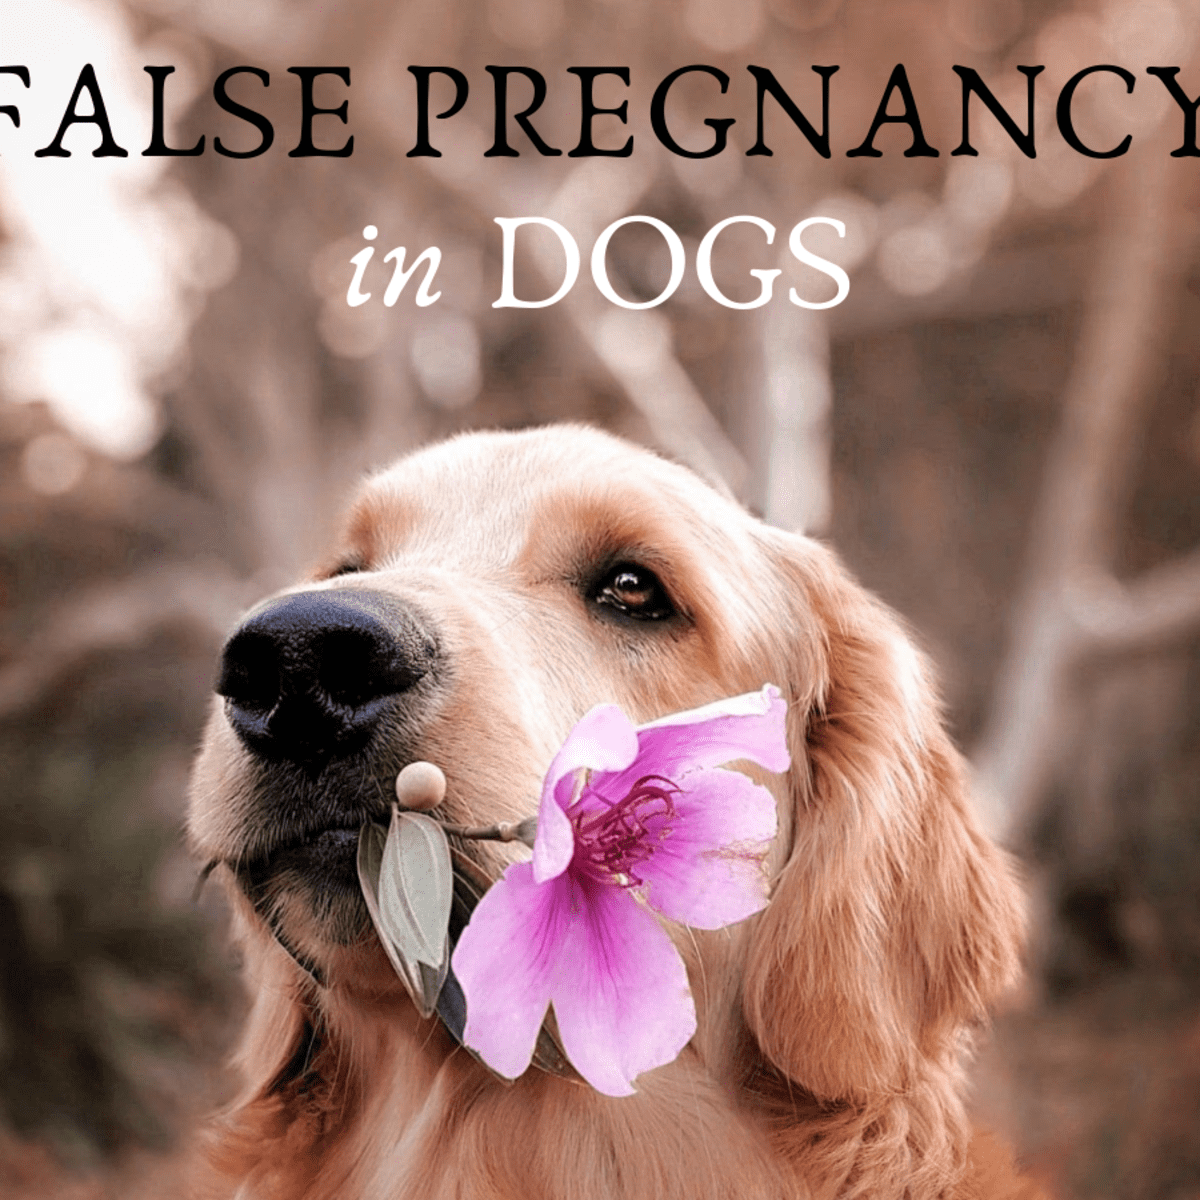 do dogs vomit when pregnant